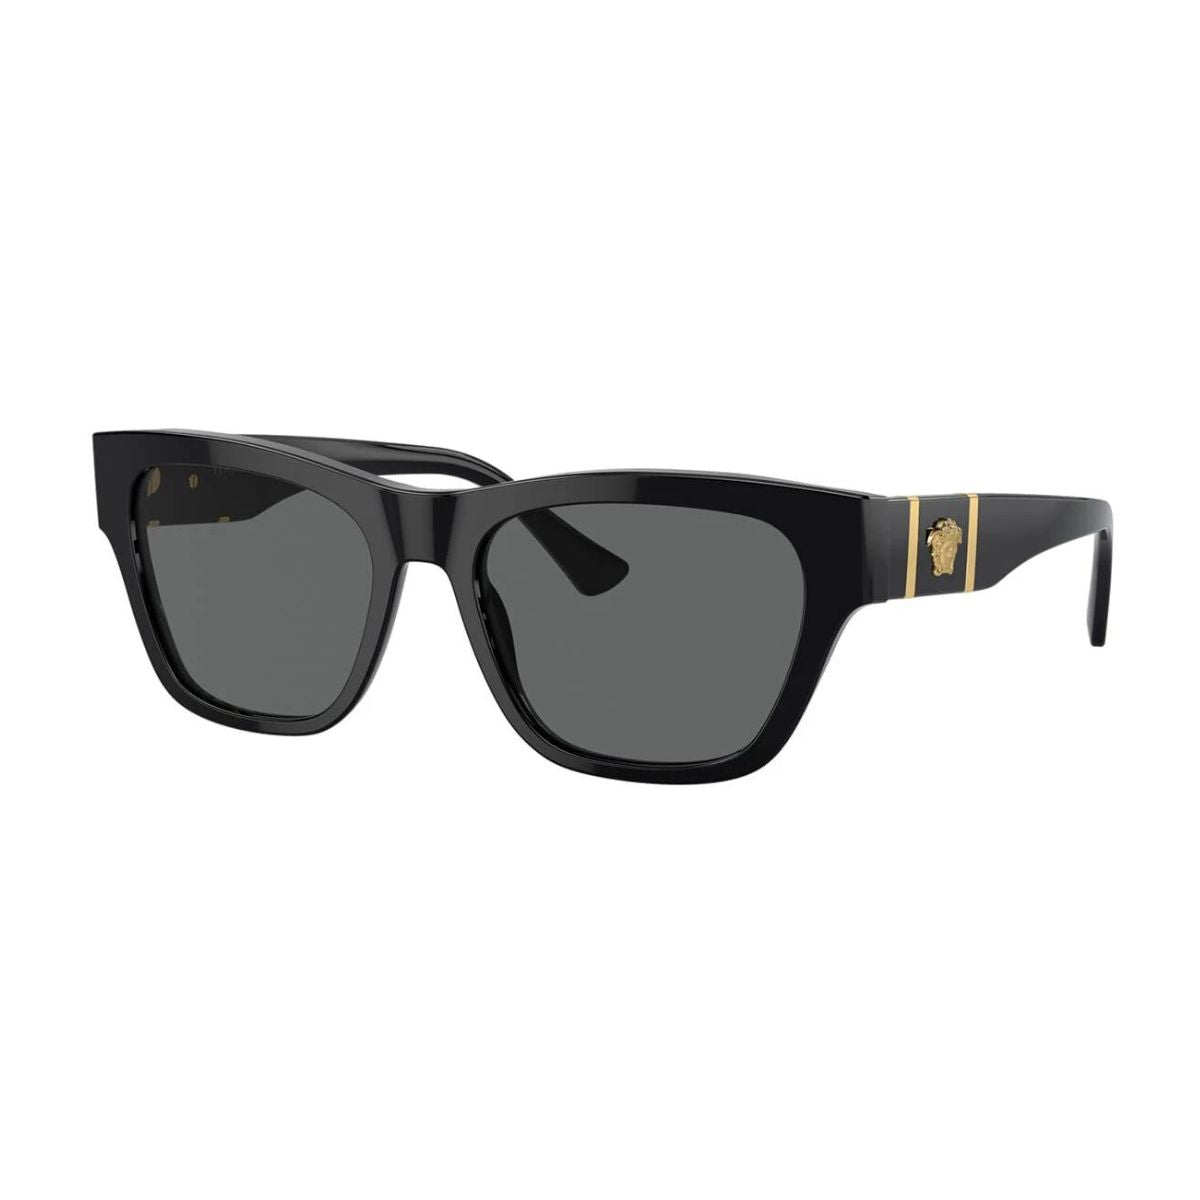 "BuyVersace 4457 GB1/87 UV Resistant Sunglasses For Men At Optorium""